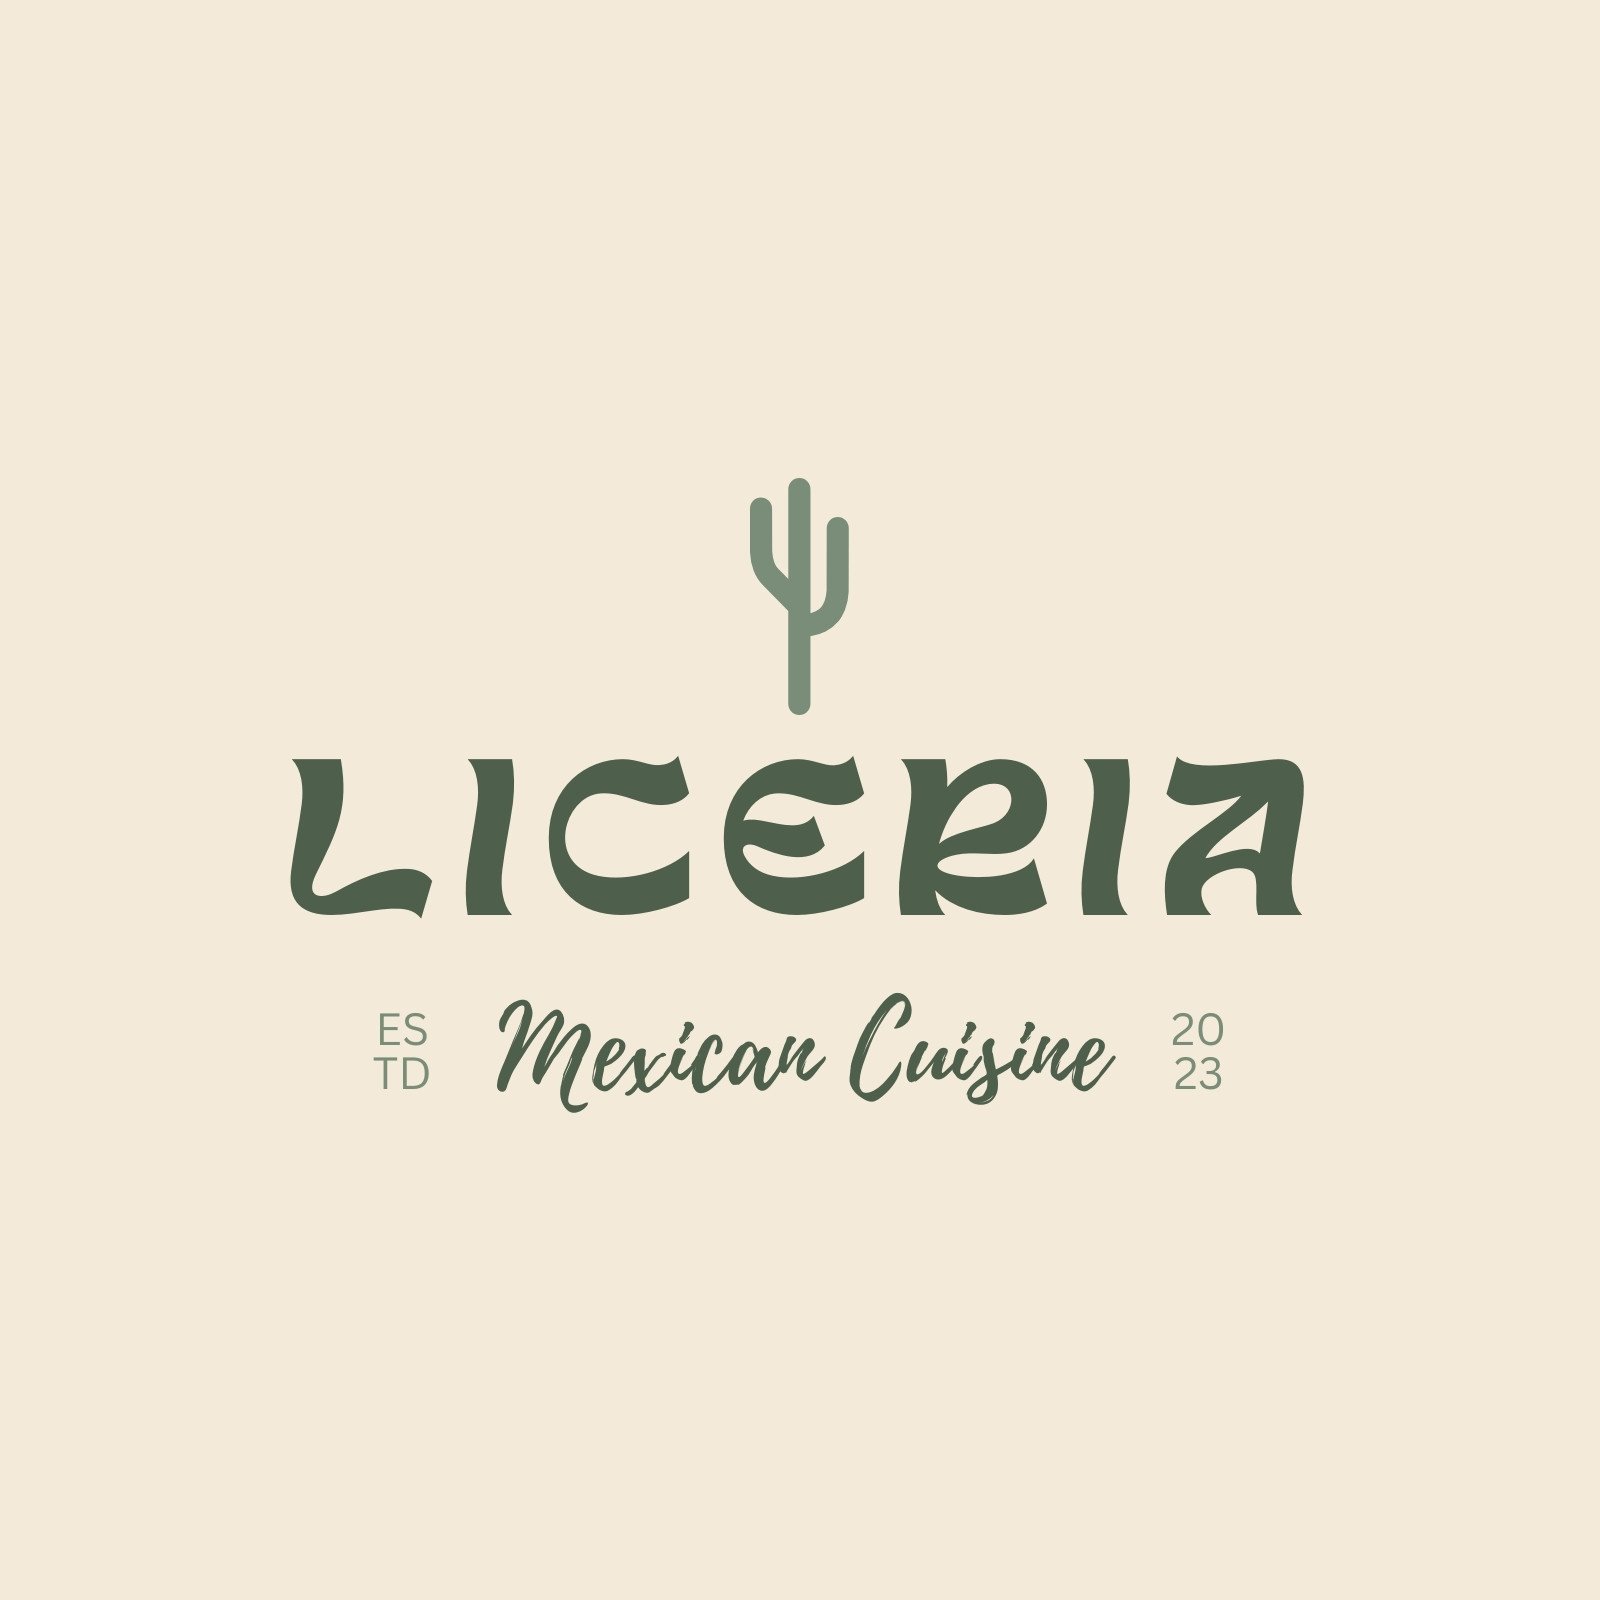 modern mexican restaurant logos